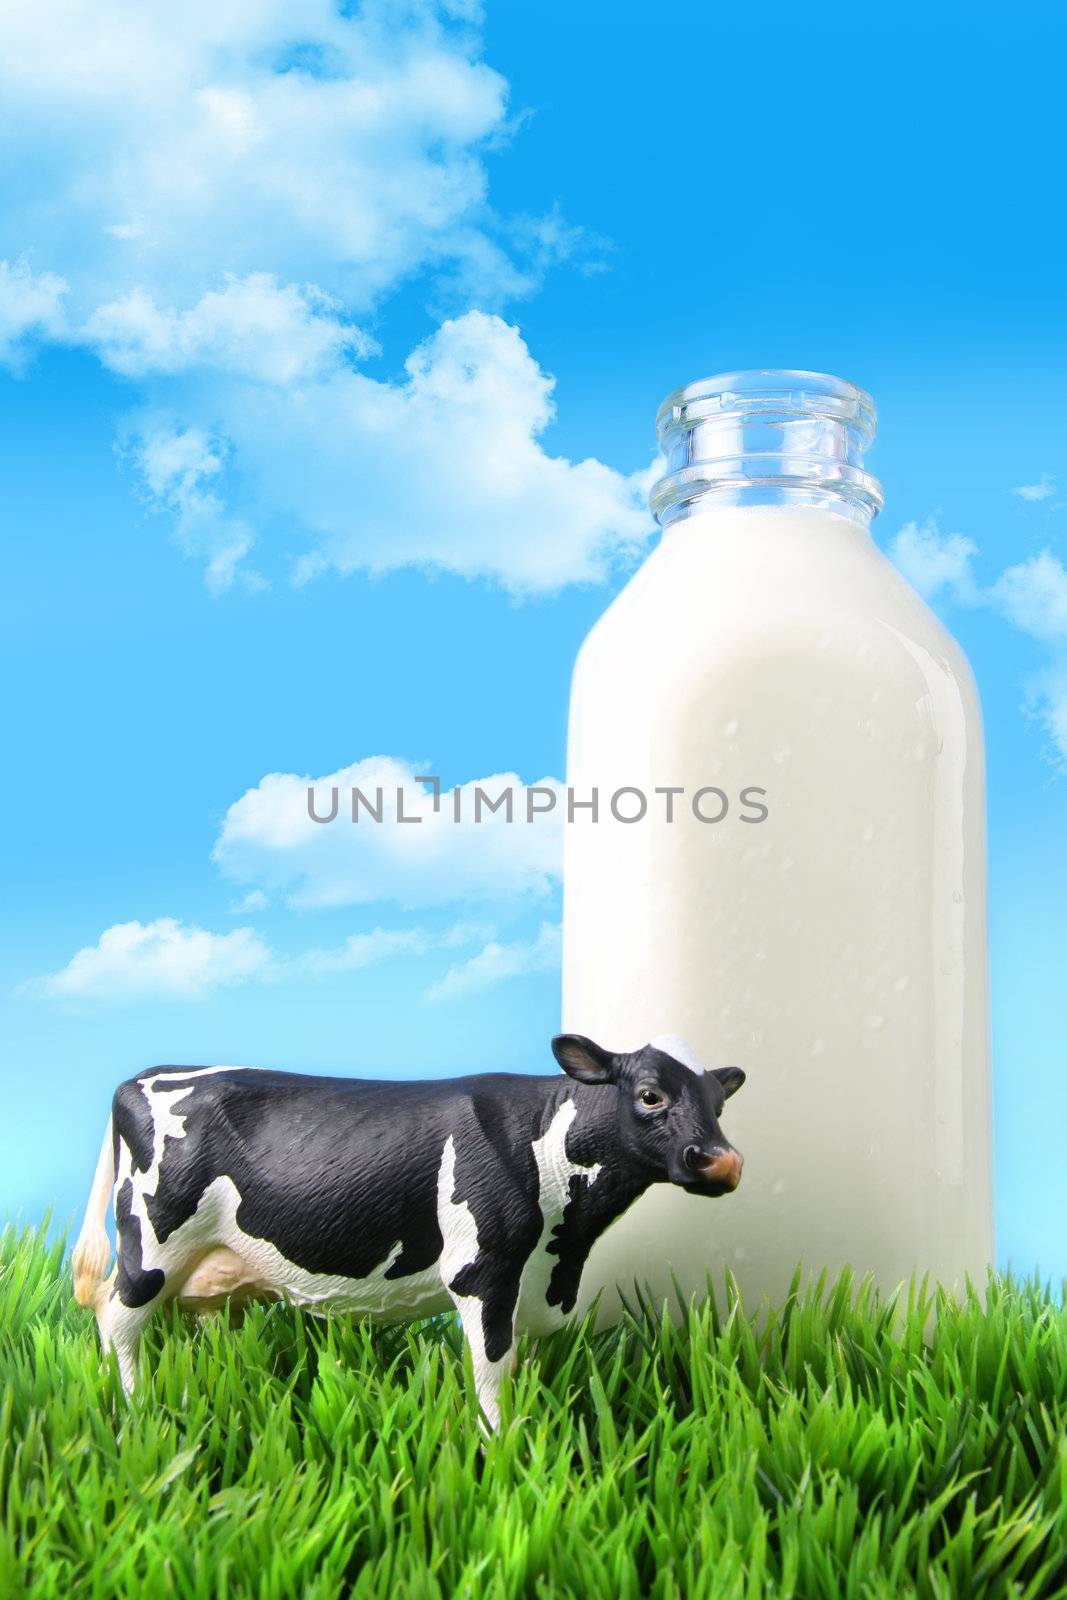 Milk bottle in the grass by Sandralise